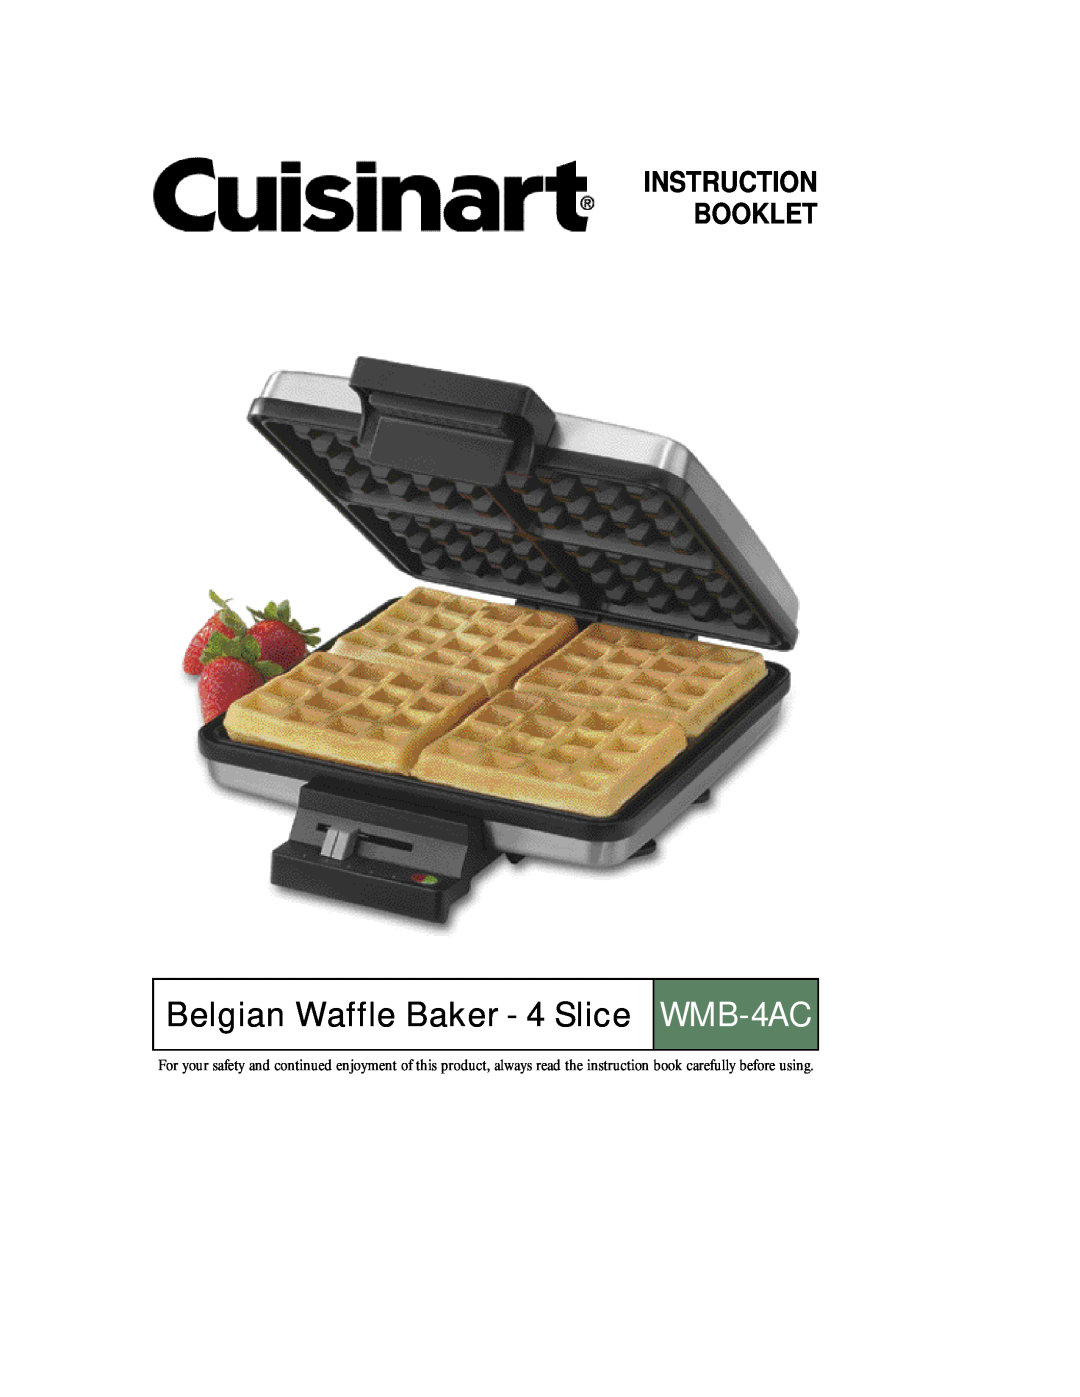 Cuisinart manual Belgian Waffle Baker - 4 Slice WMB-4AC, Instruction Booklet 